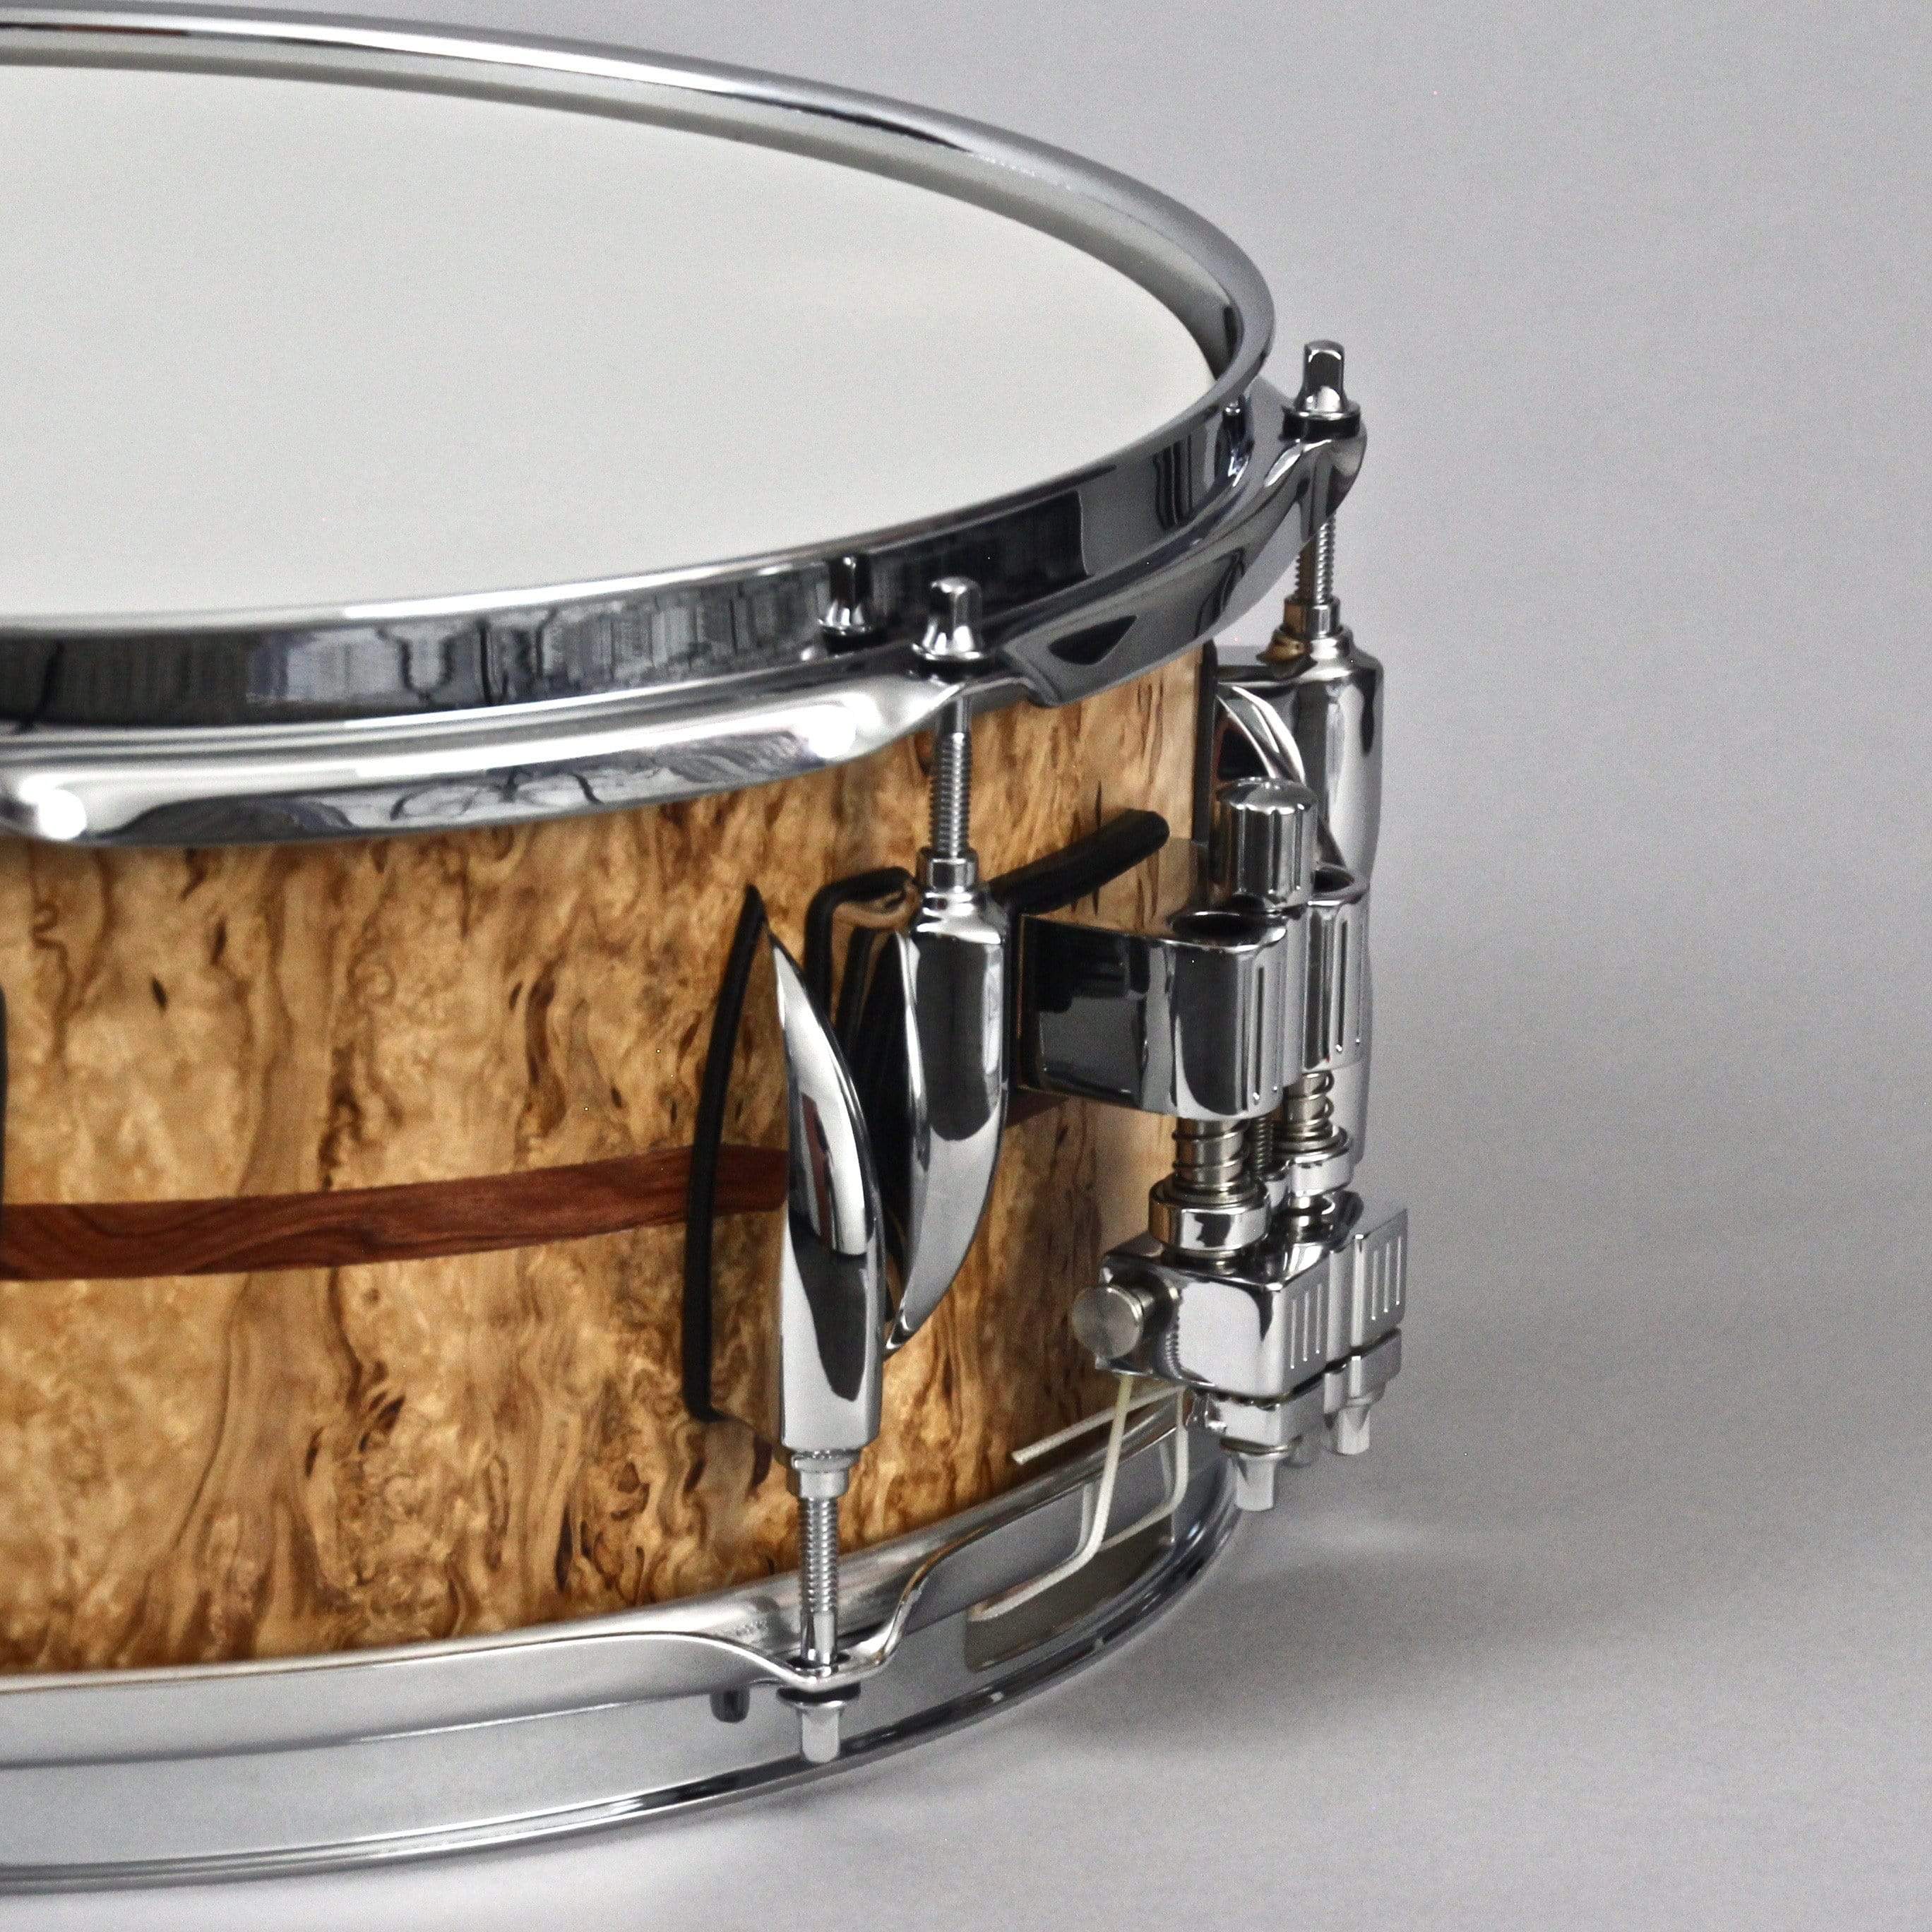 Sonor Benny Greb Signature Snare Drum 2.0 Beech 13